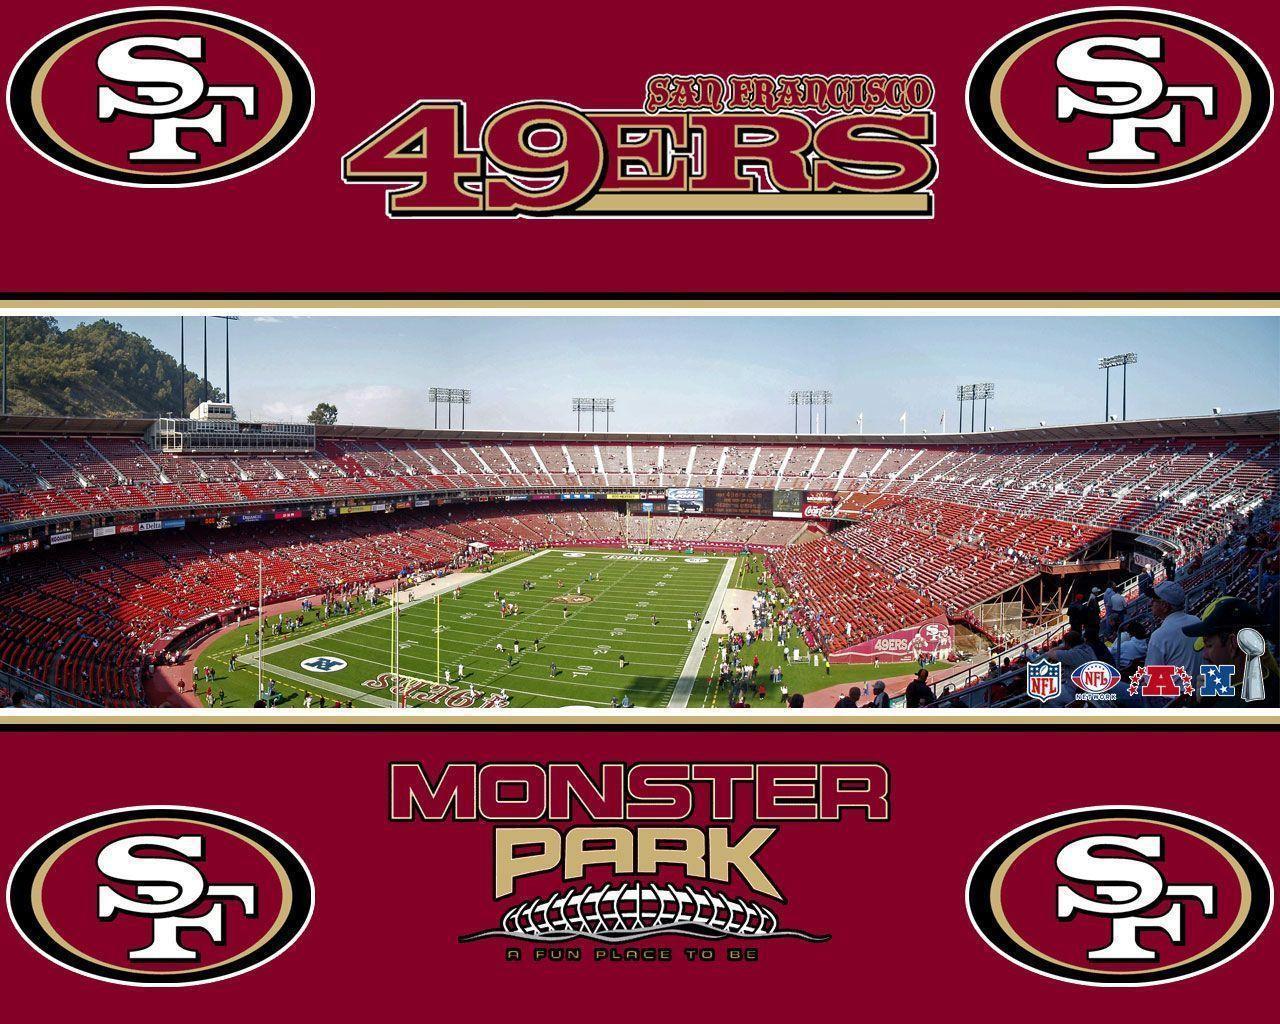 San Francisco 49ers wallpaper image. San Francisco 49ers wallpaper